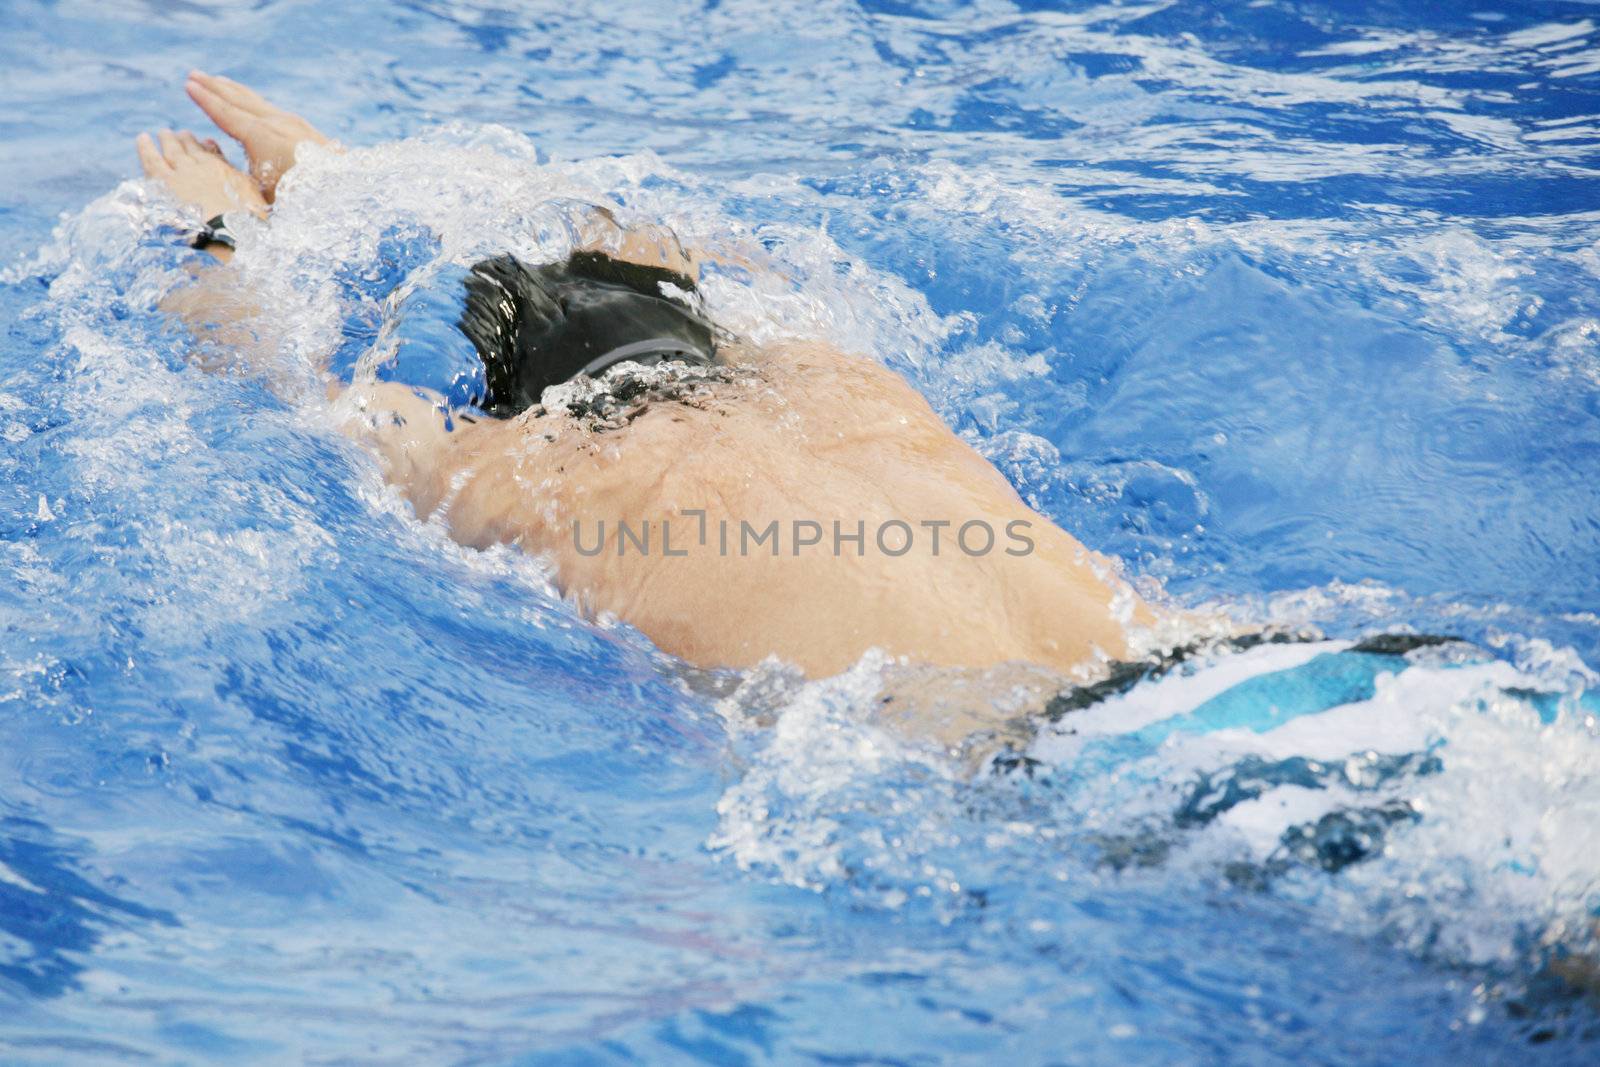 man swims in swimming pool by dacasdo